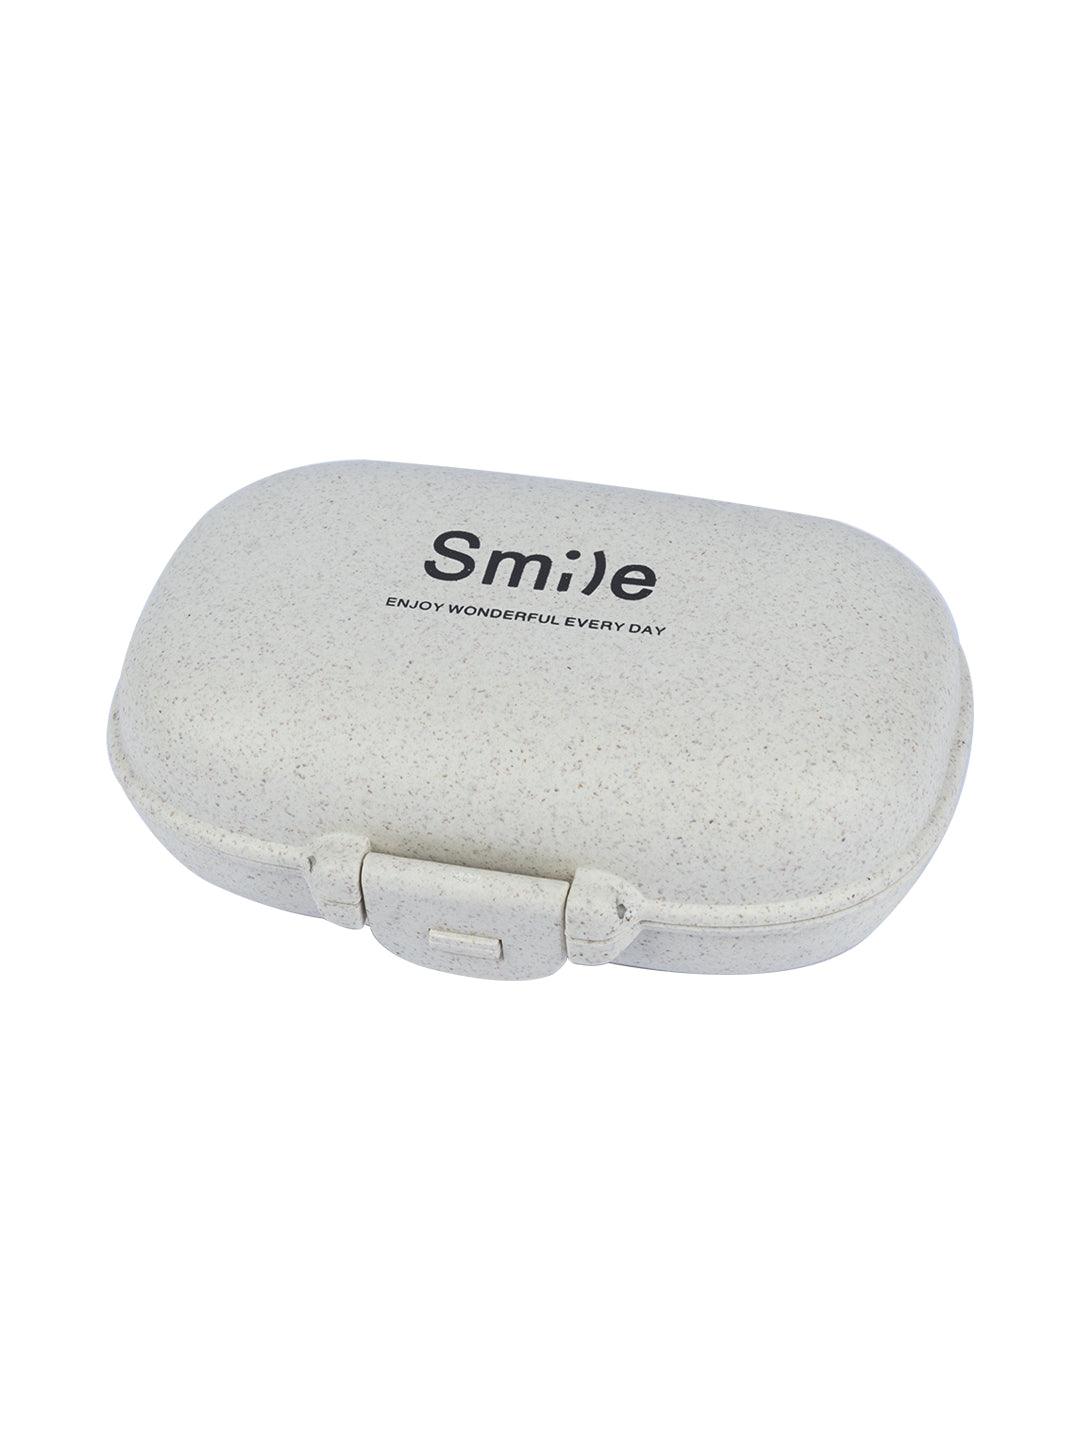 Market 99 Pill Box (Assorted), Solid, Assorted, Plastic - MARKET 99